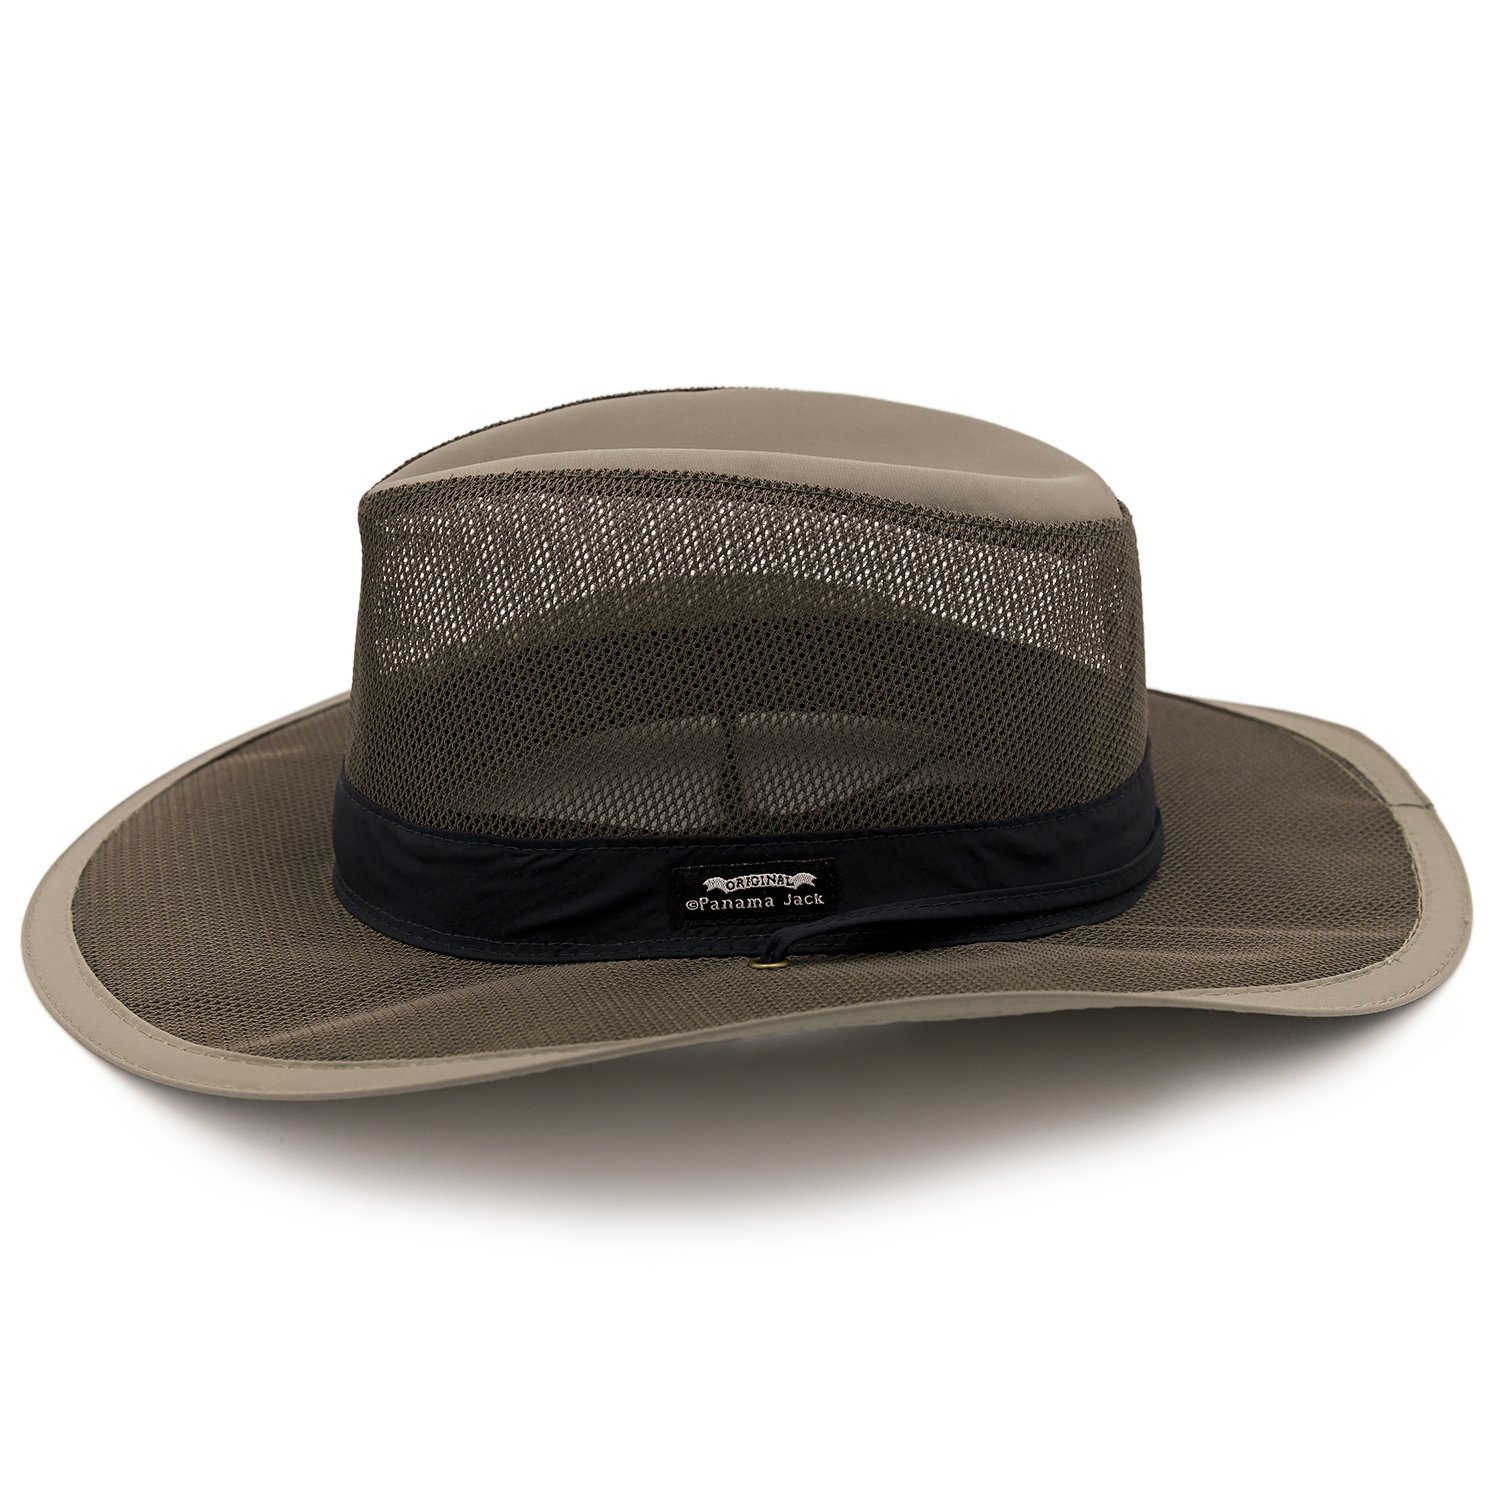 Panama Jack Mesh Crown Safari Sun Hat 3" Brim Adjustable Chin Cord SPF UPF 